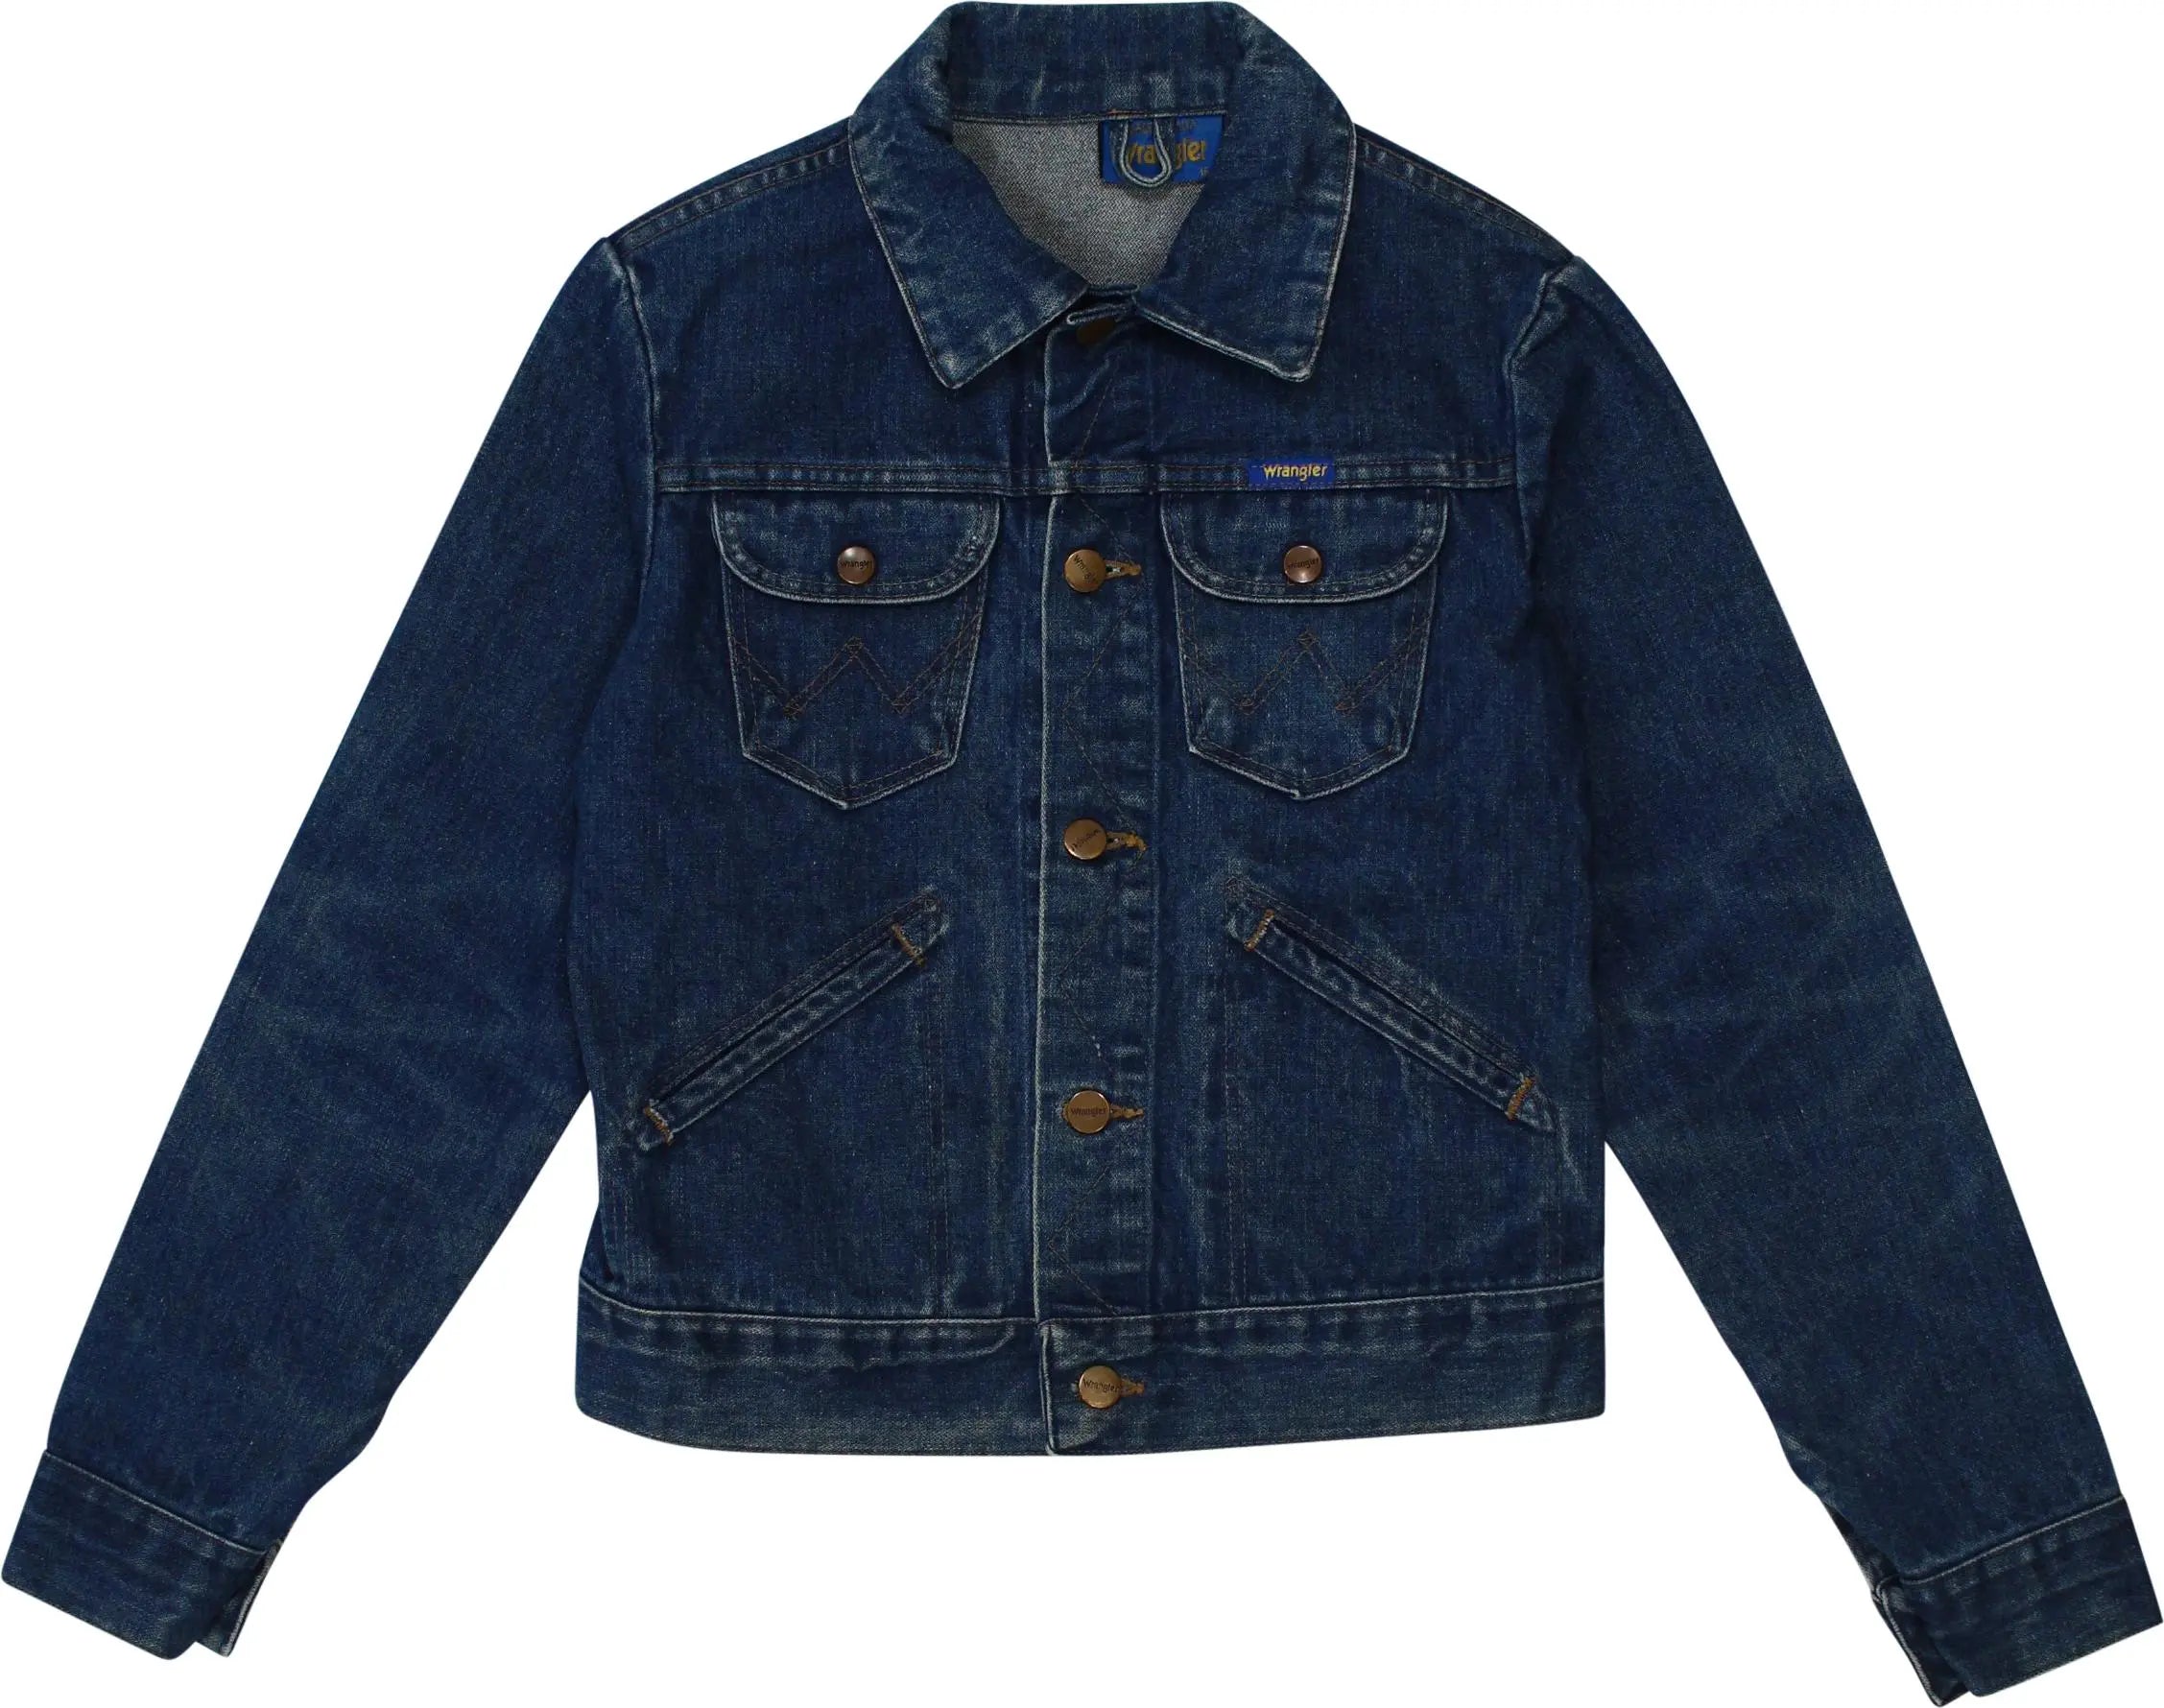 Wrangler - Denim Jacket by Wrangler- ThriftTale.com - Vintage and second handclothing